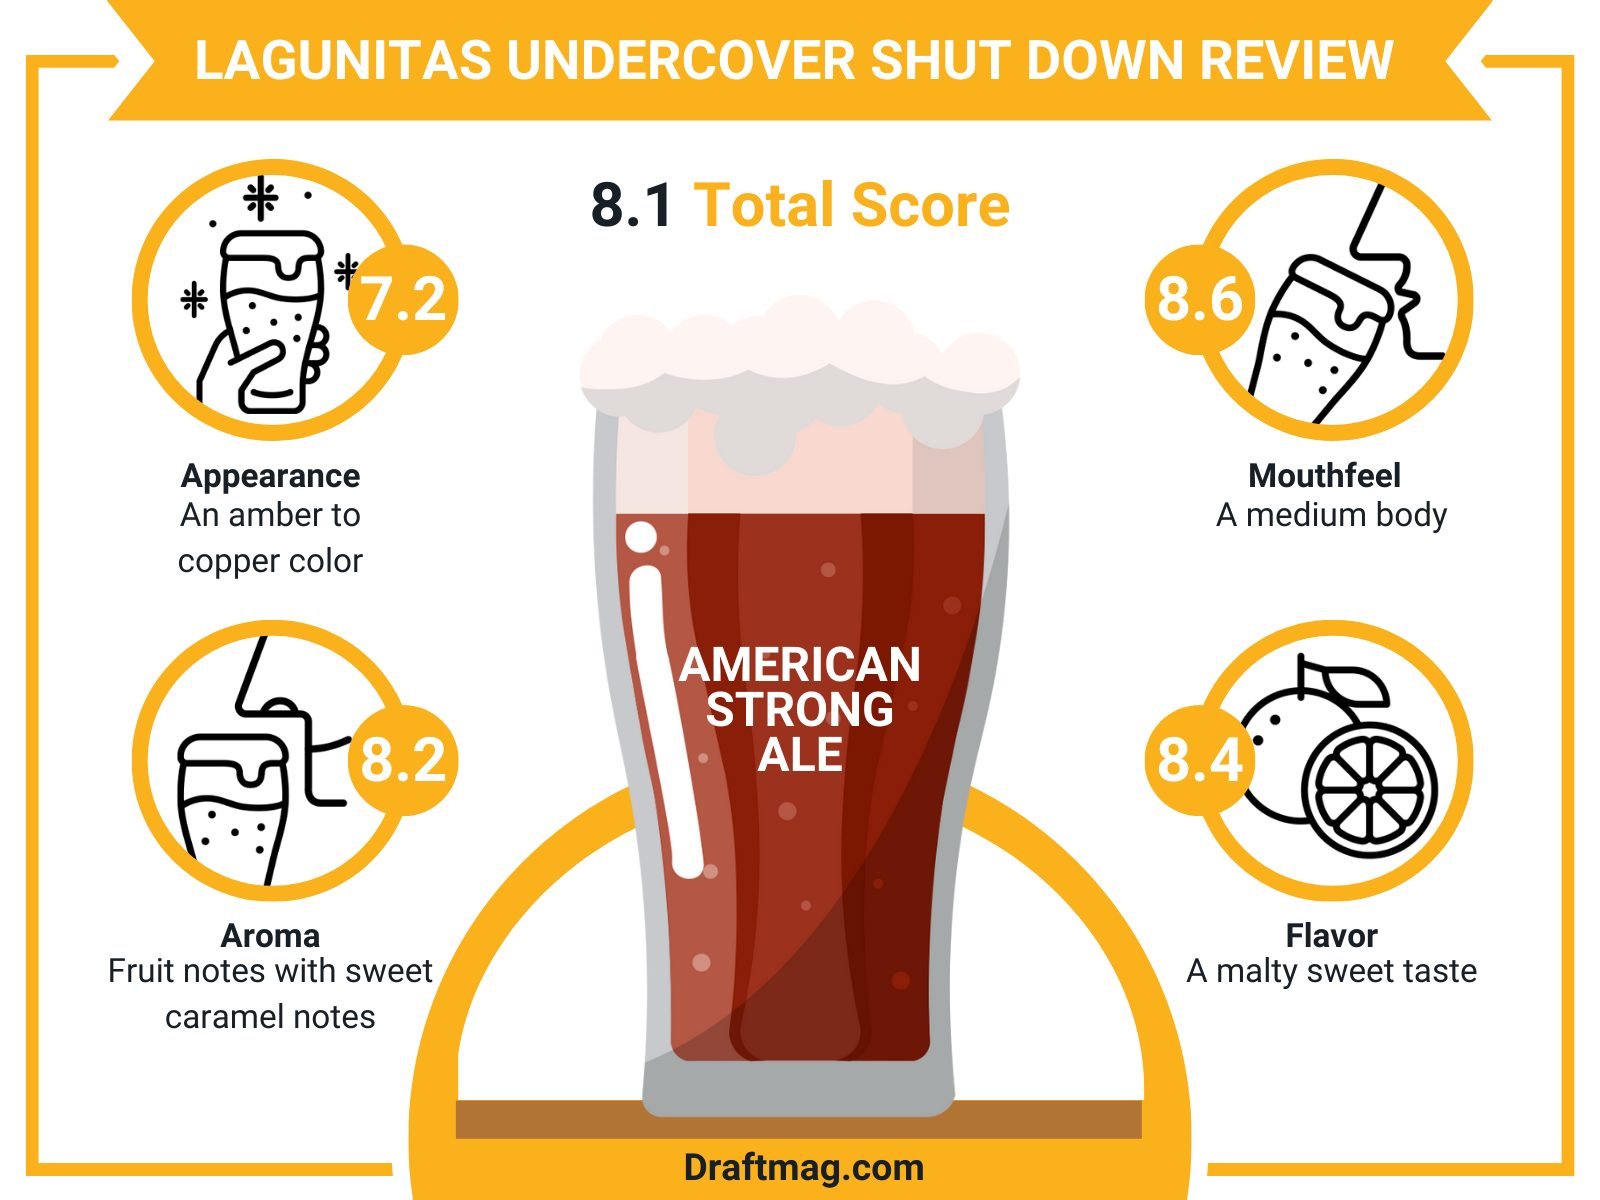 Lagunitas Undercover Review Infographic